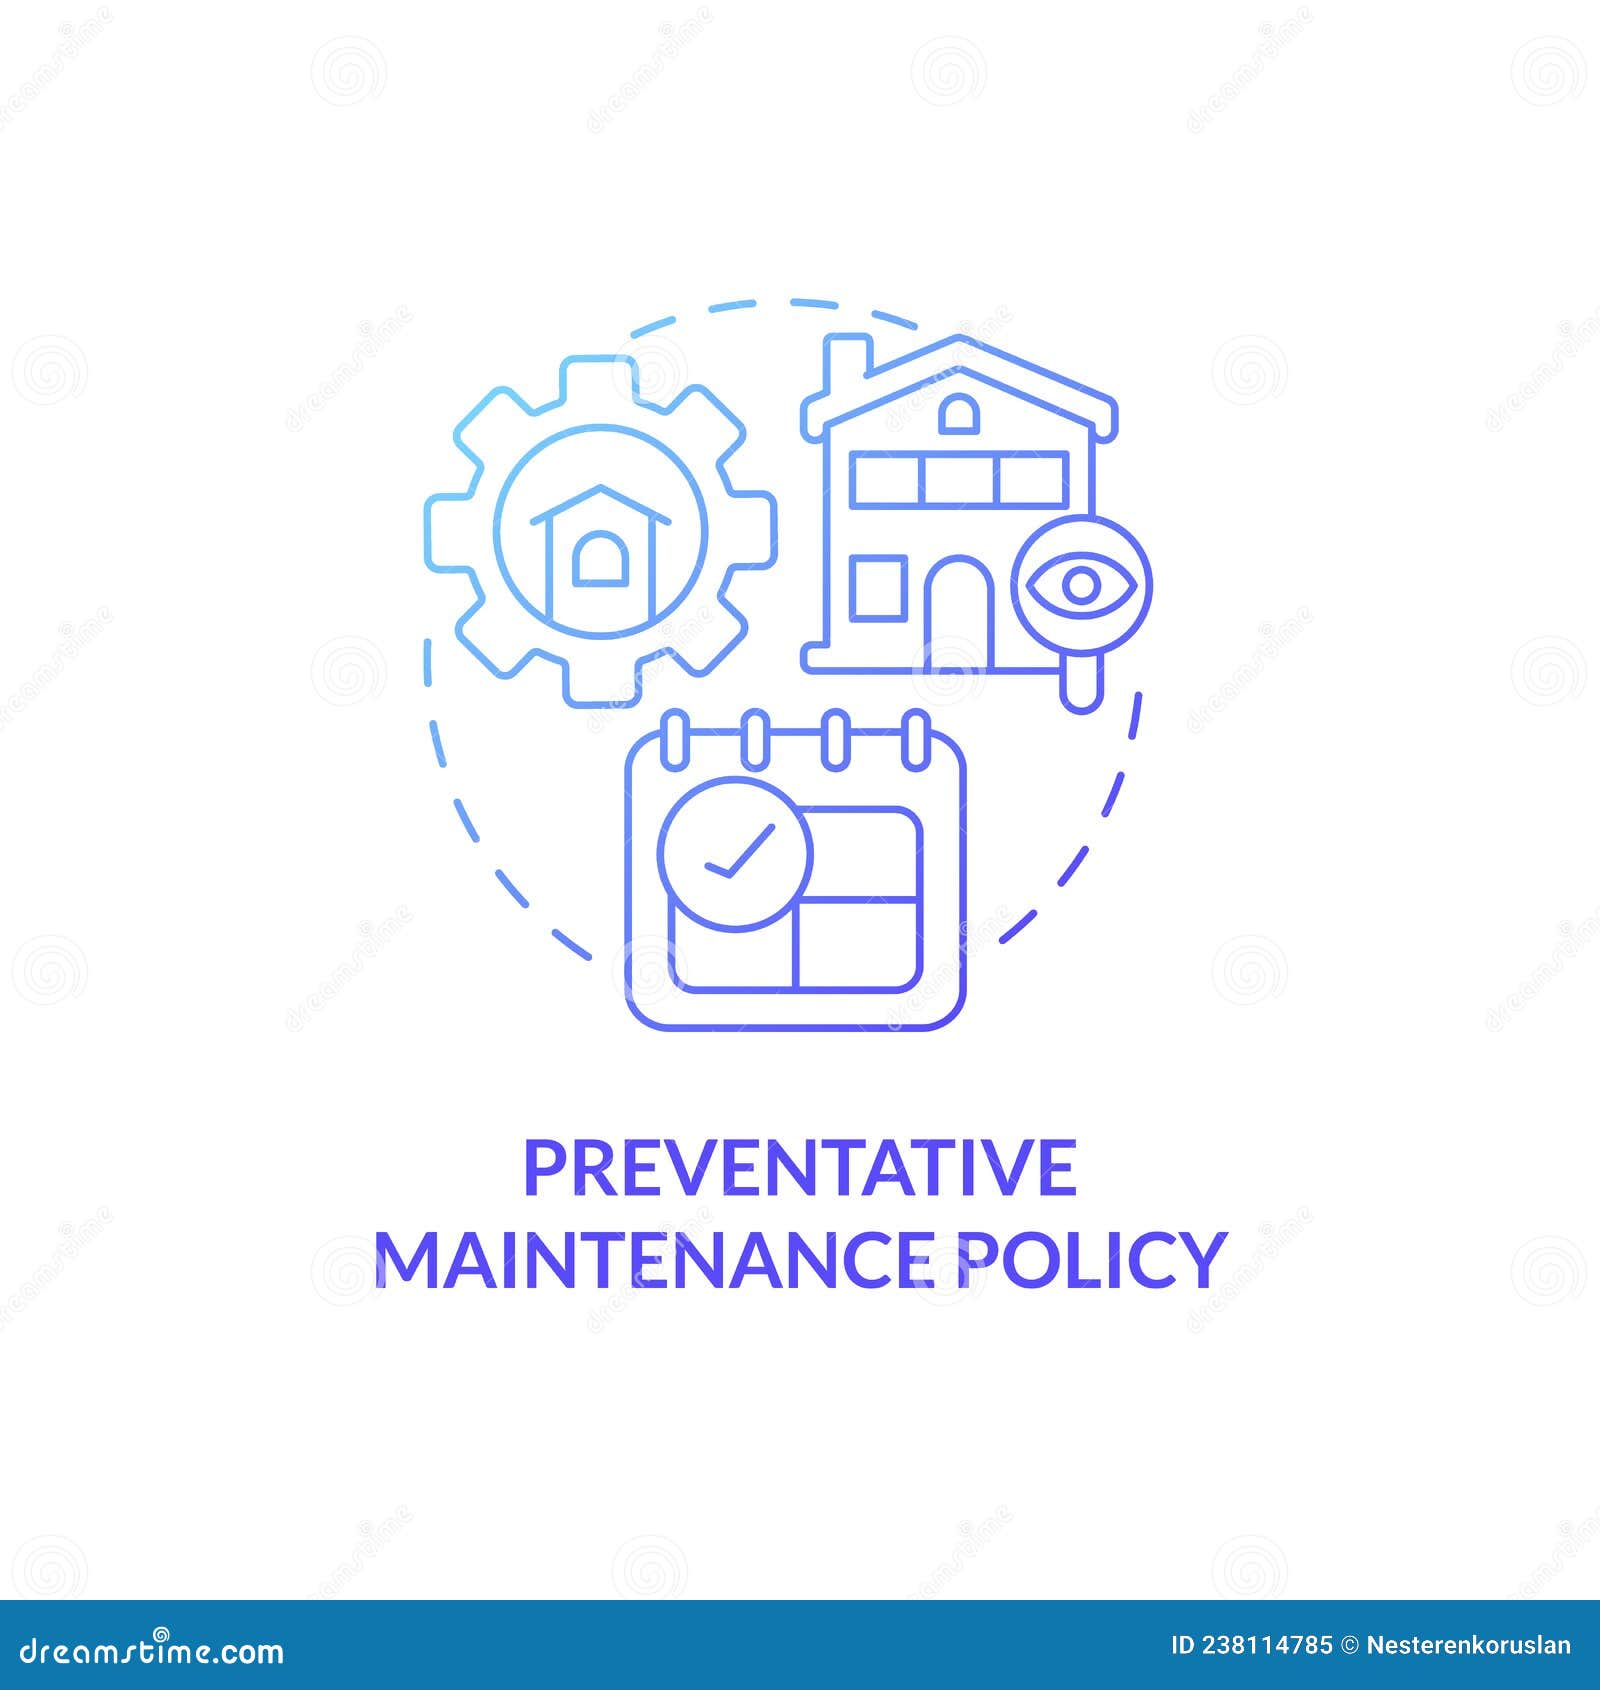 preventative maintenance policy blue gradient concept icon